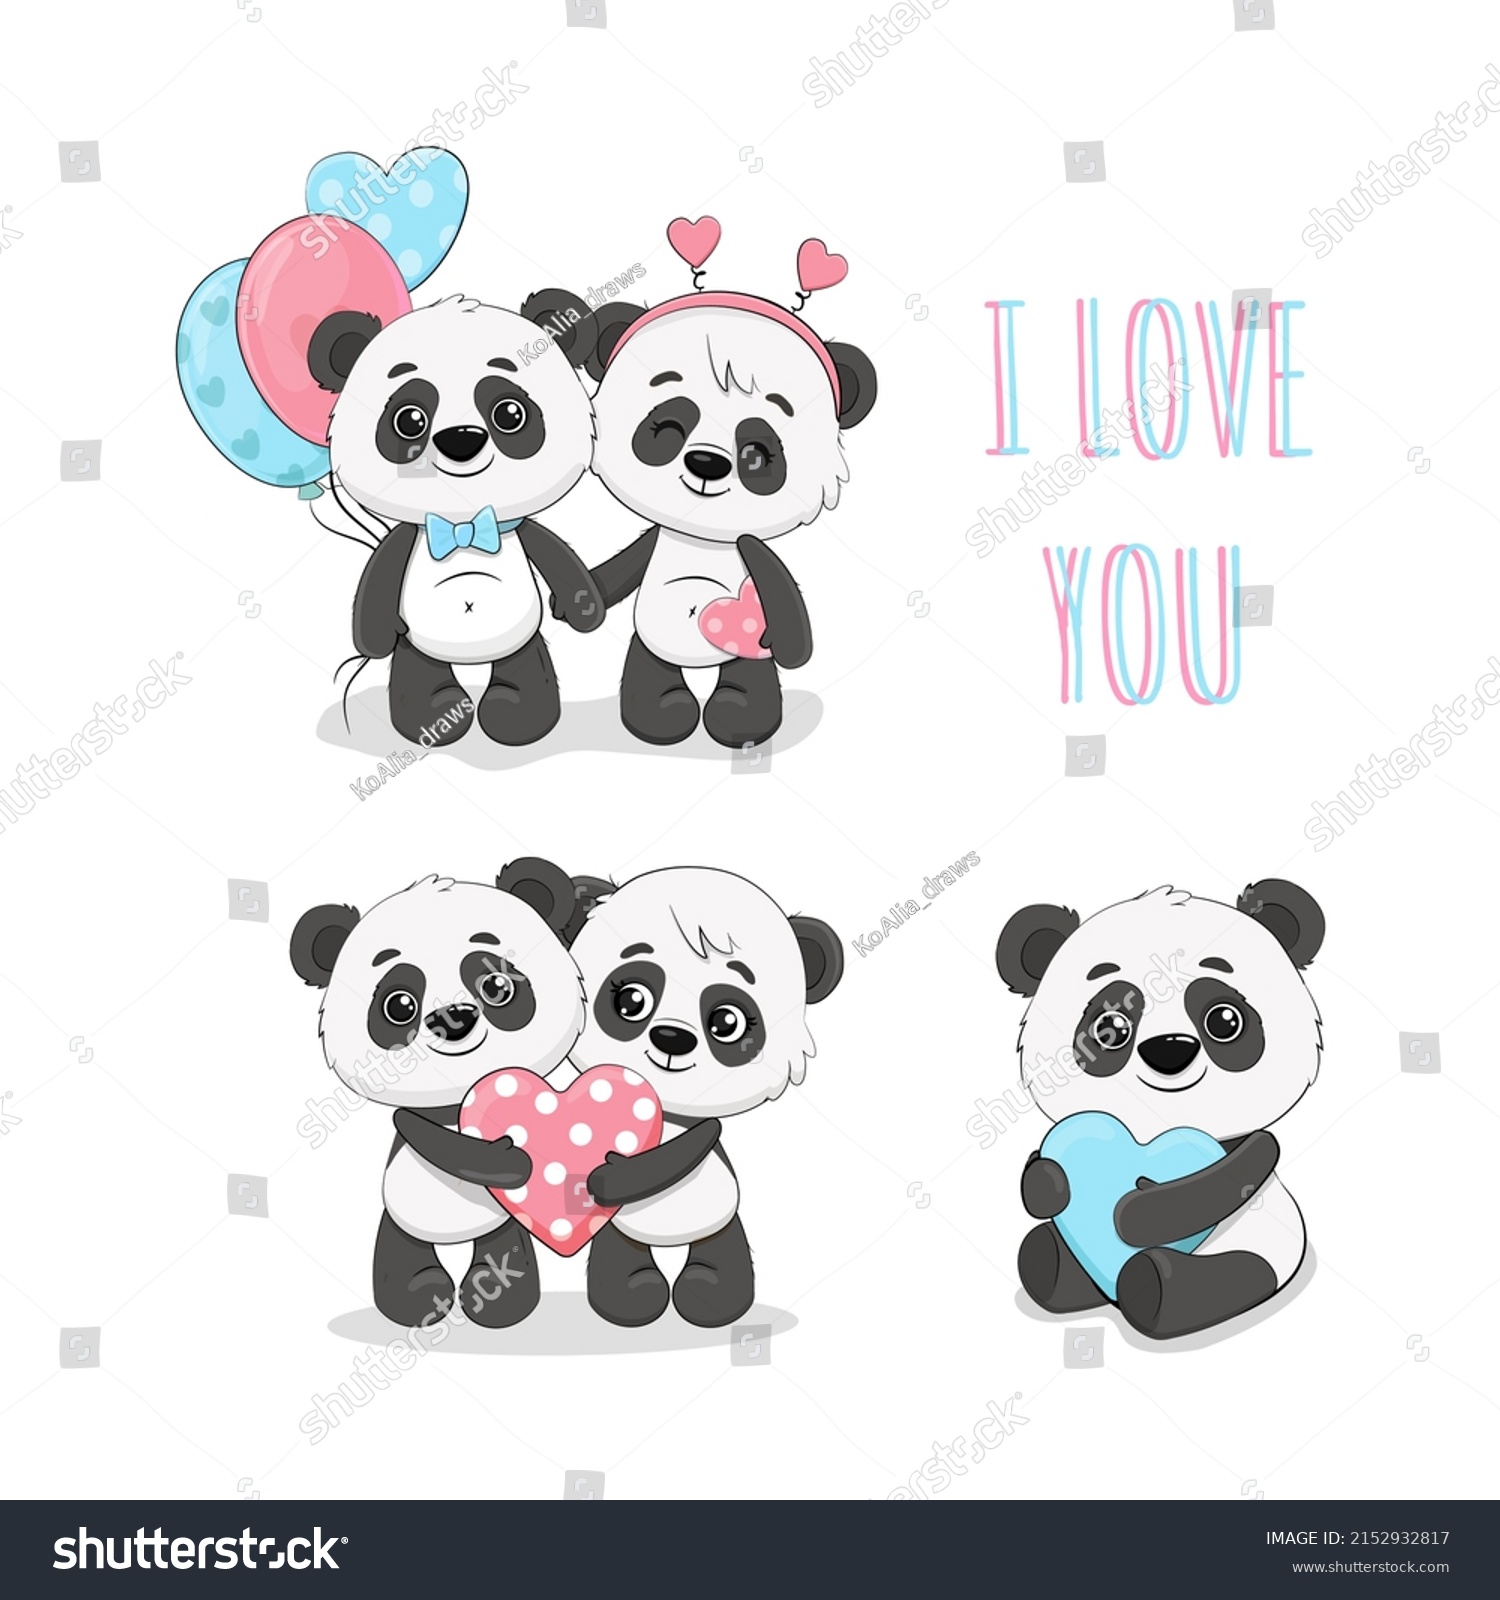 Two Cute Cartoon Pandas Balloons Hearts Stock Vector Royalty Free 2152932817 Shutterstock 